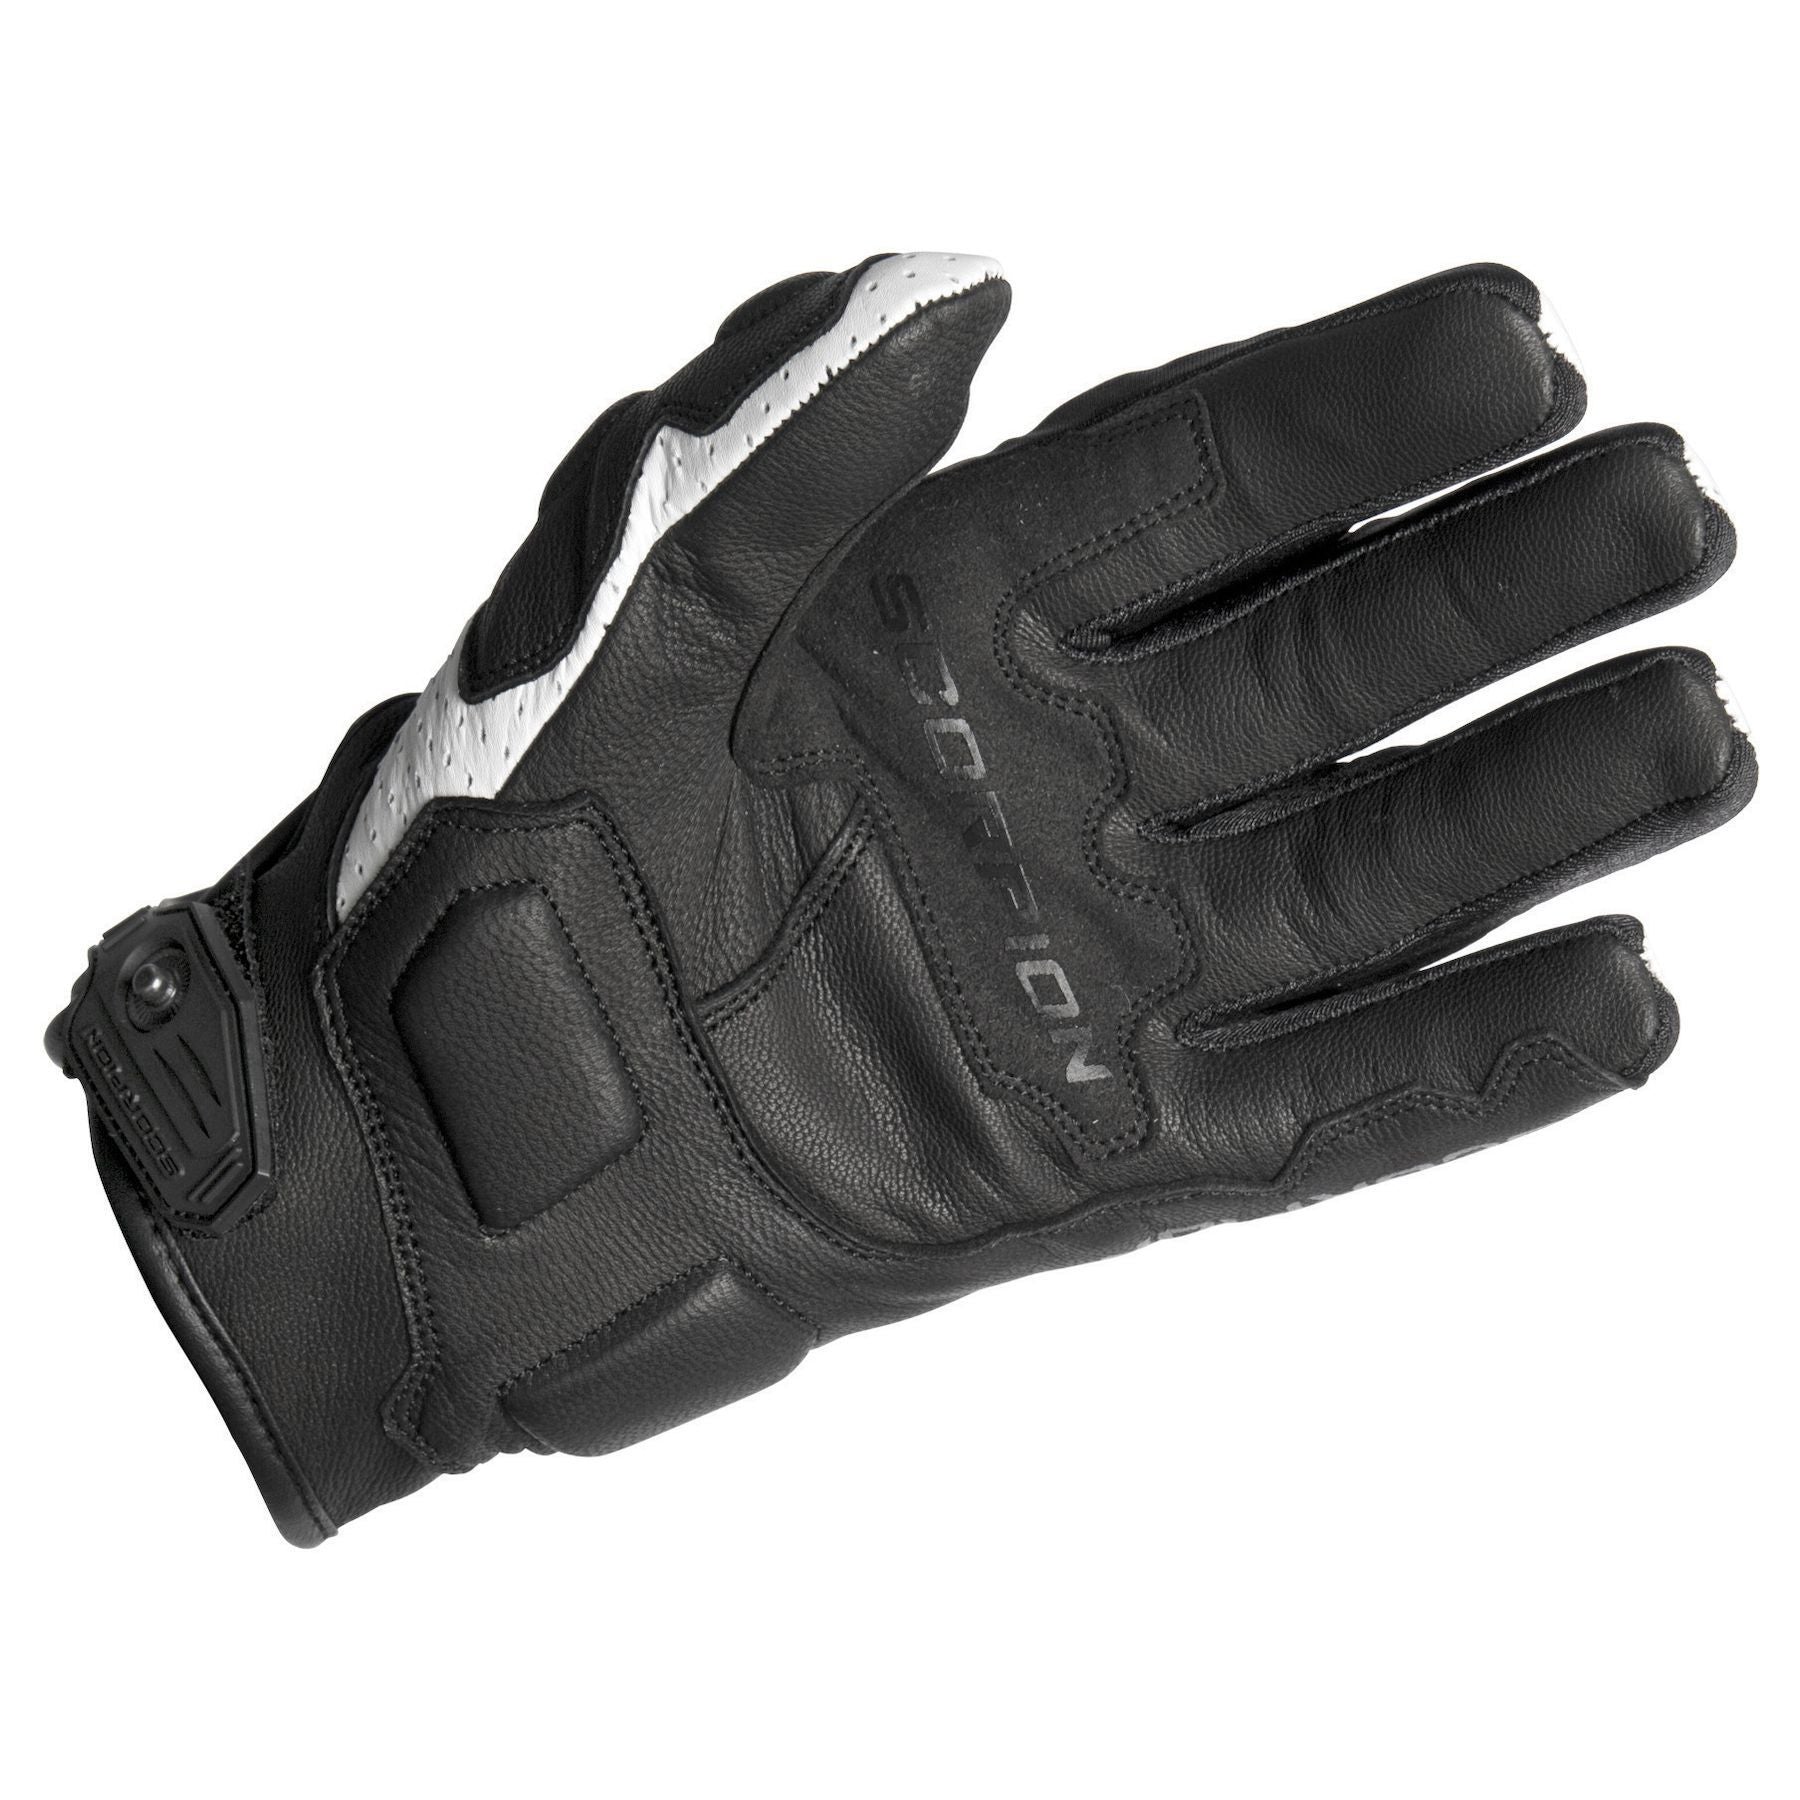 Scorpion Klaw II White Leather Gloves